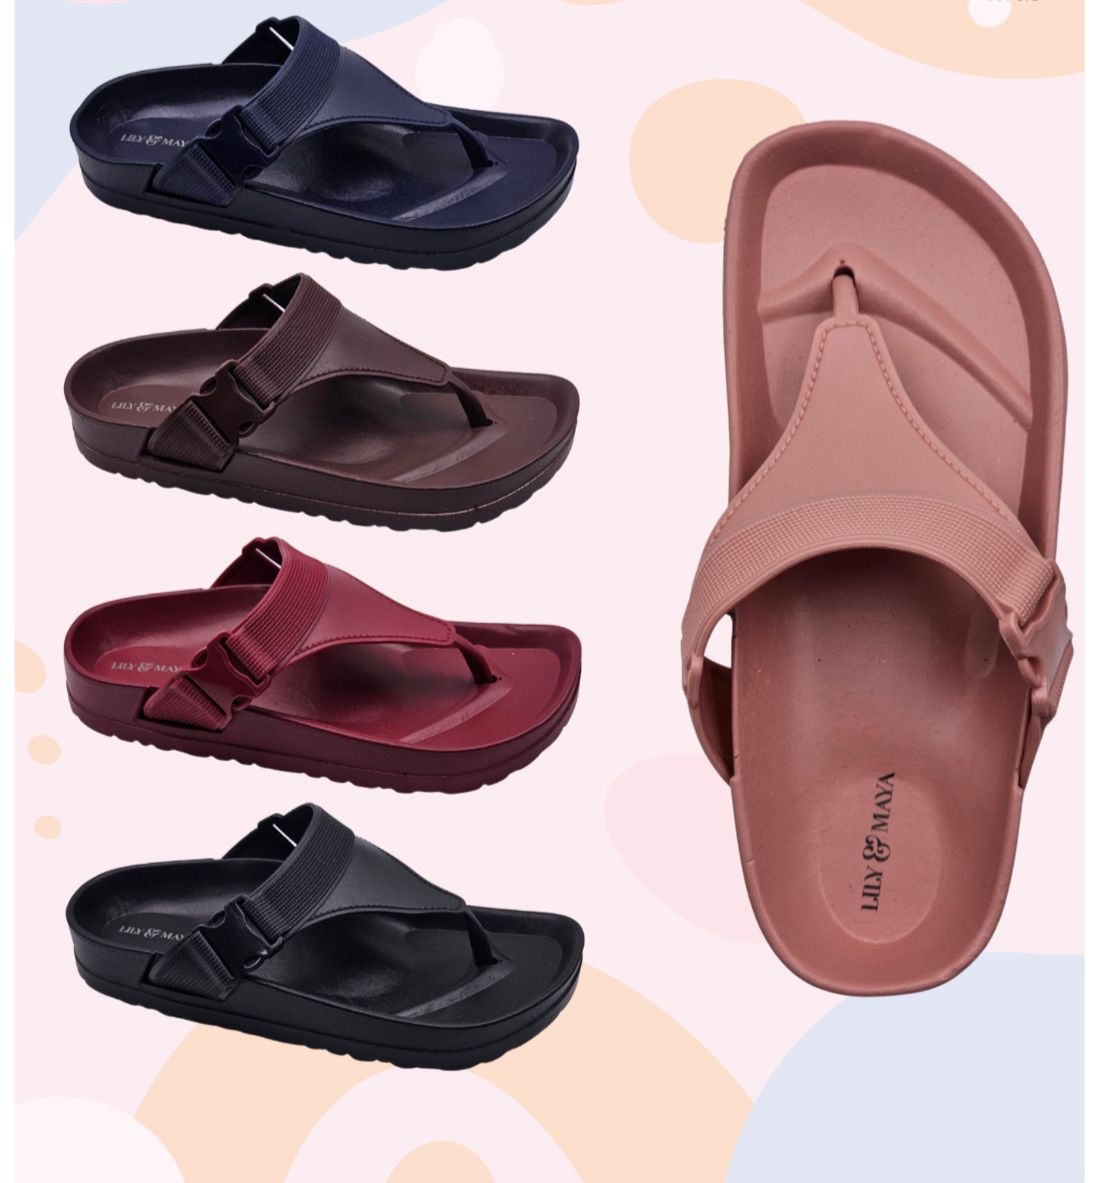 Shoes For Girls Price in Sri Lanka - Buy Girls Shoes Online - Daraz.lk